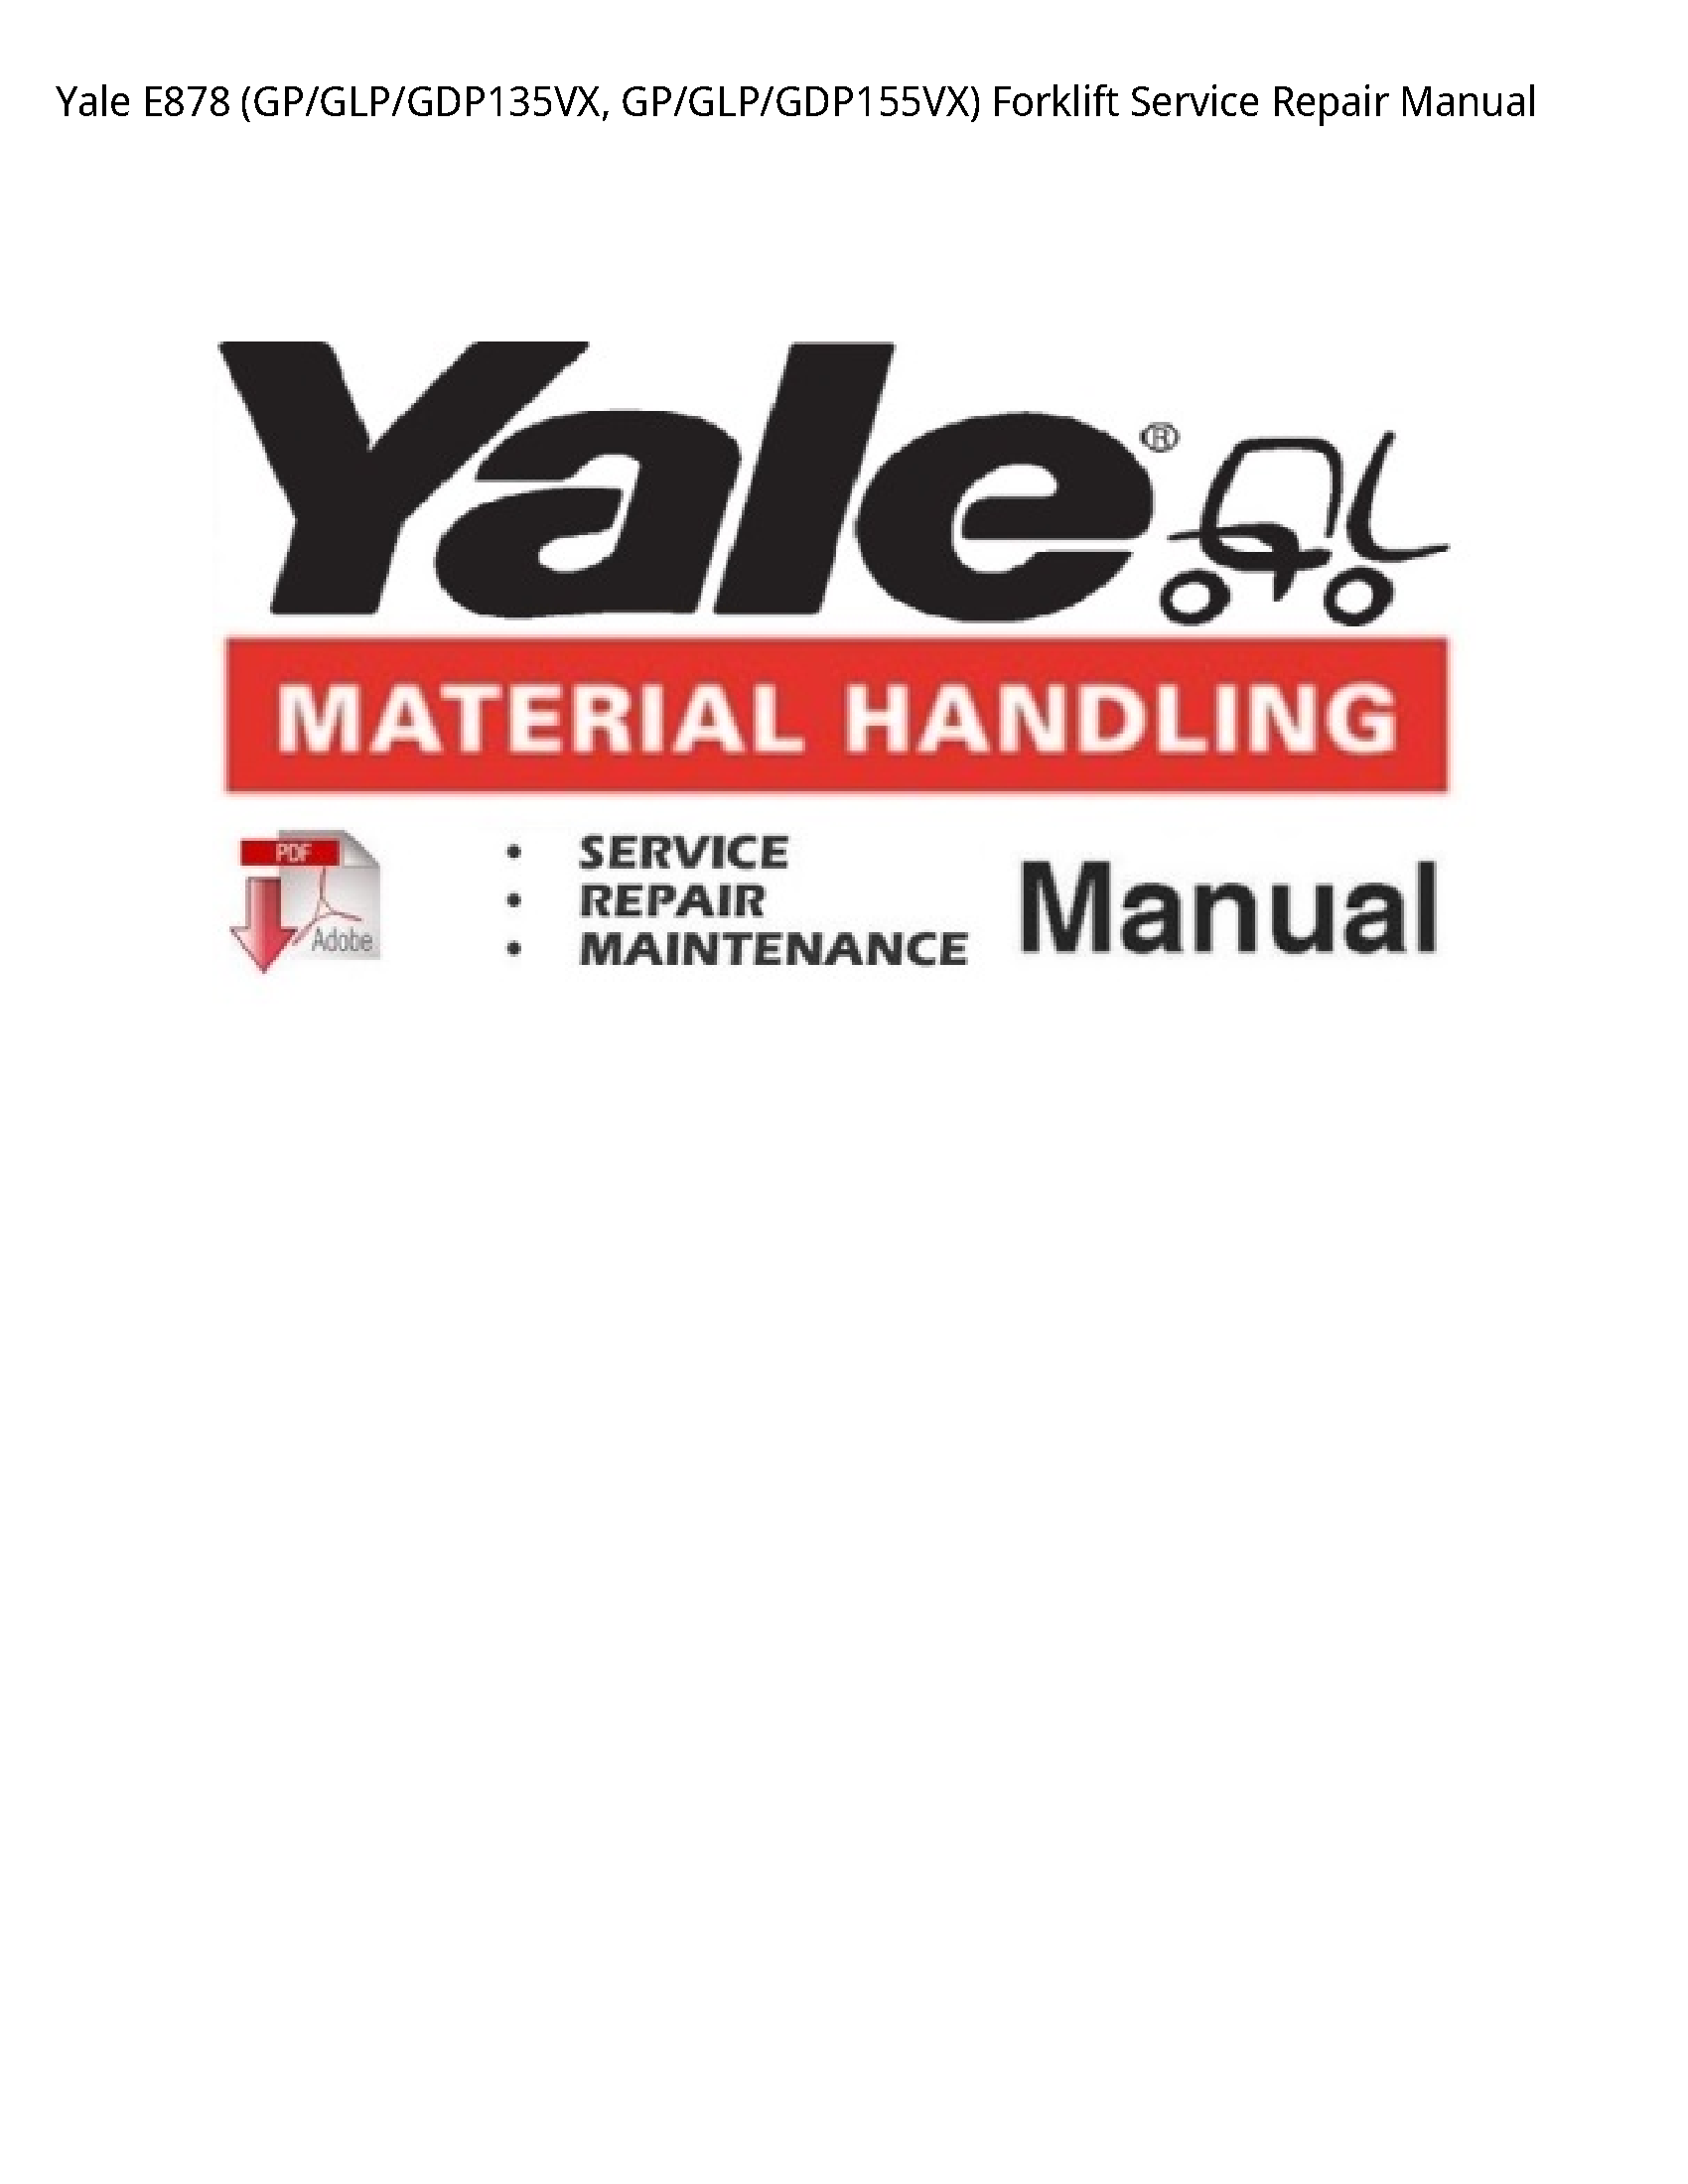 Yale E878 Forklift manual